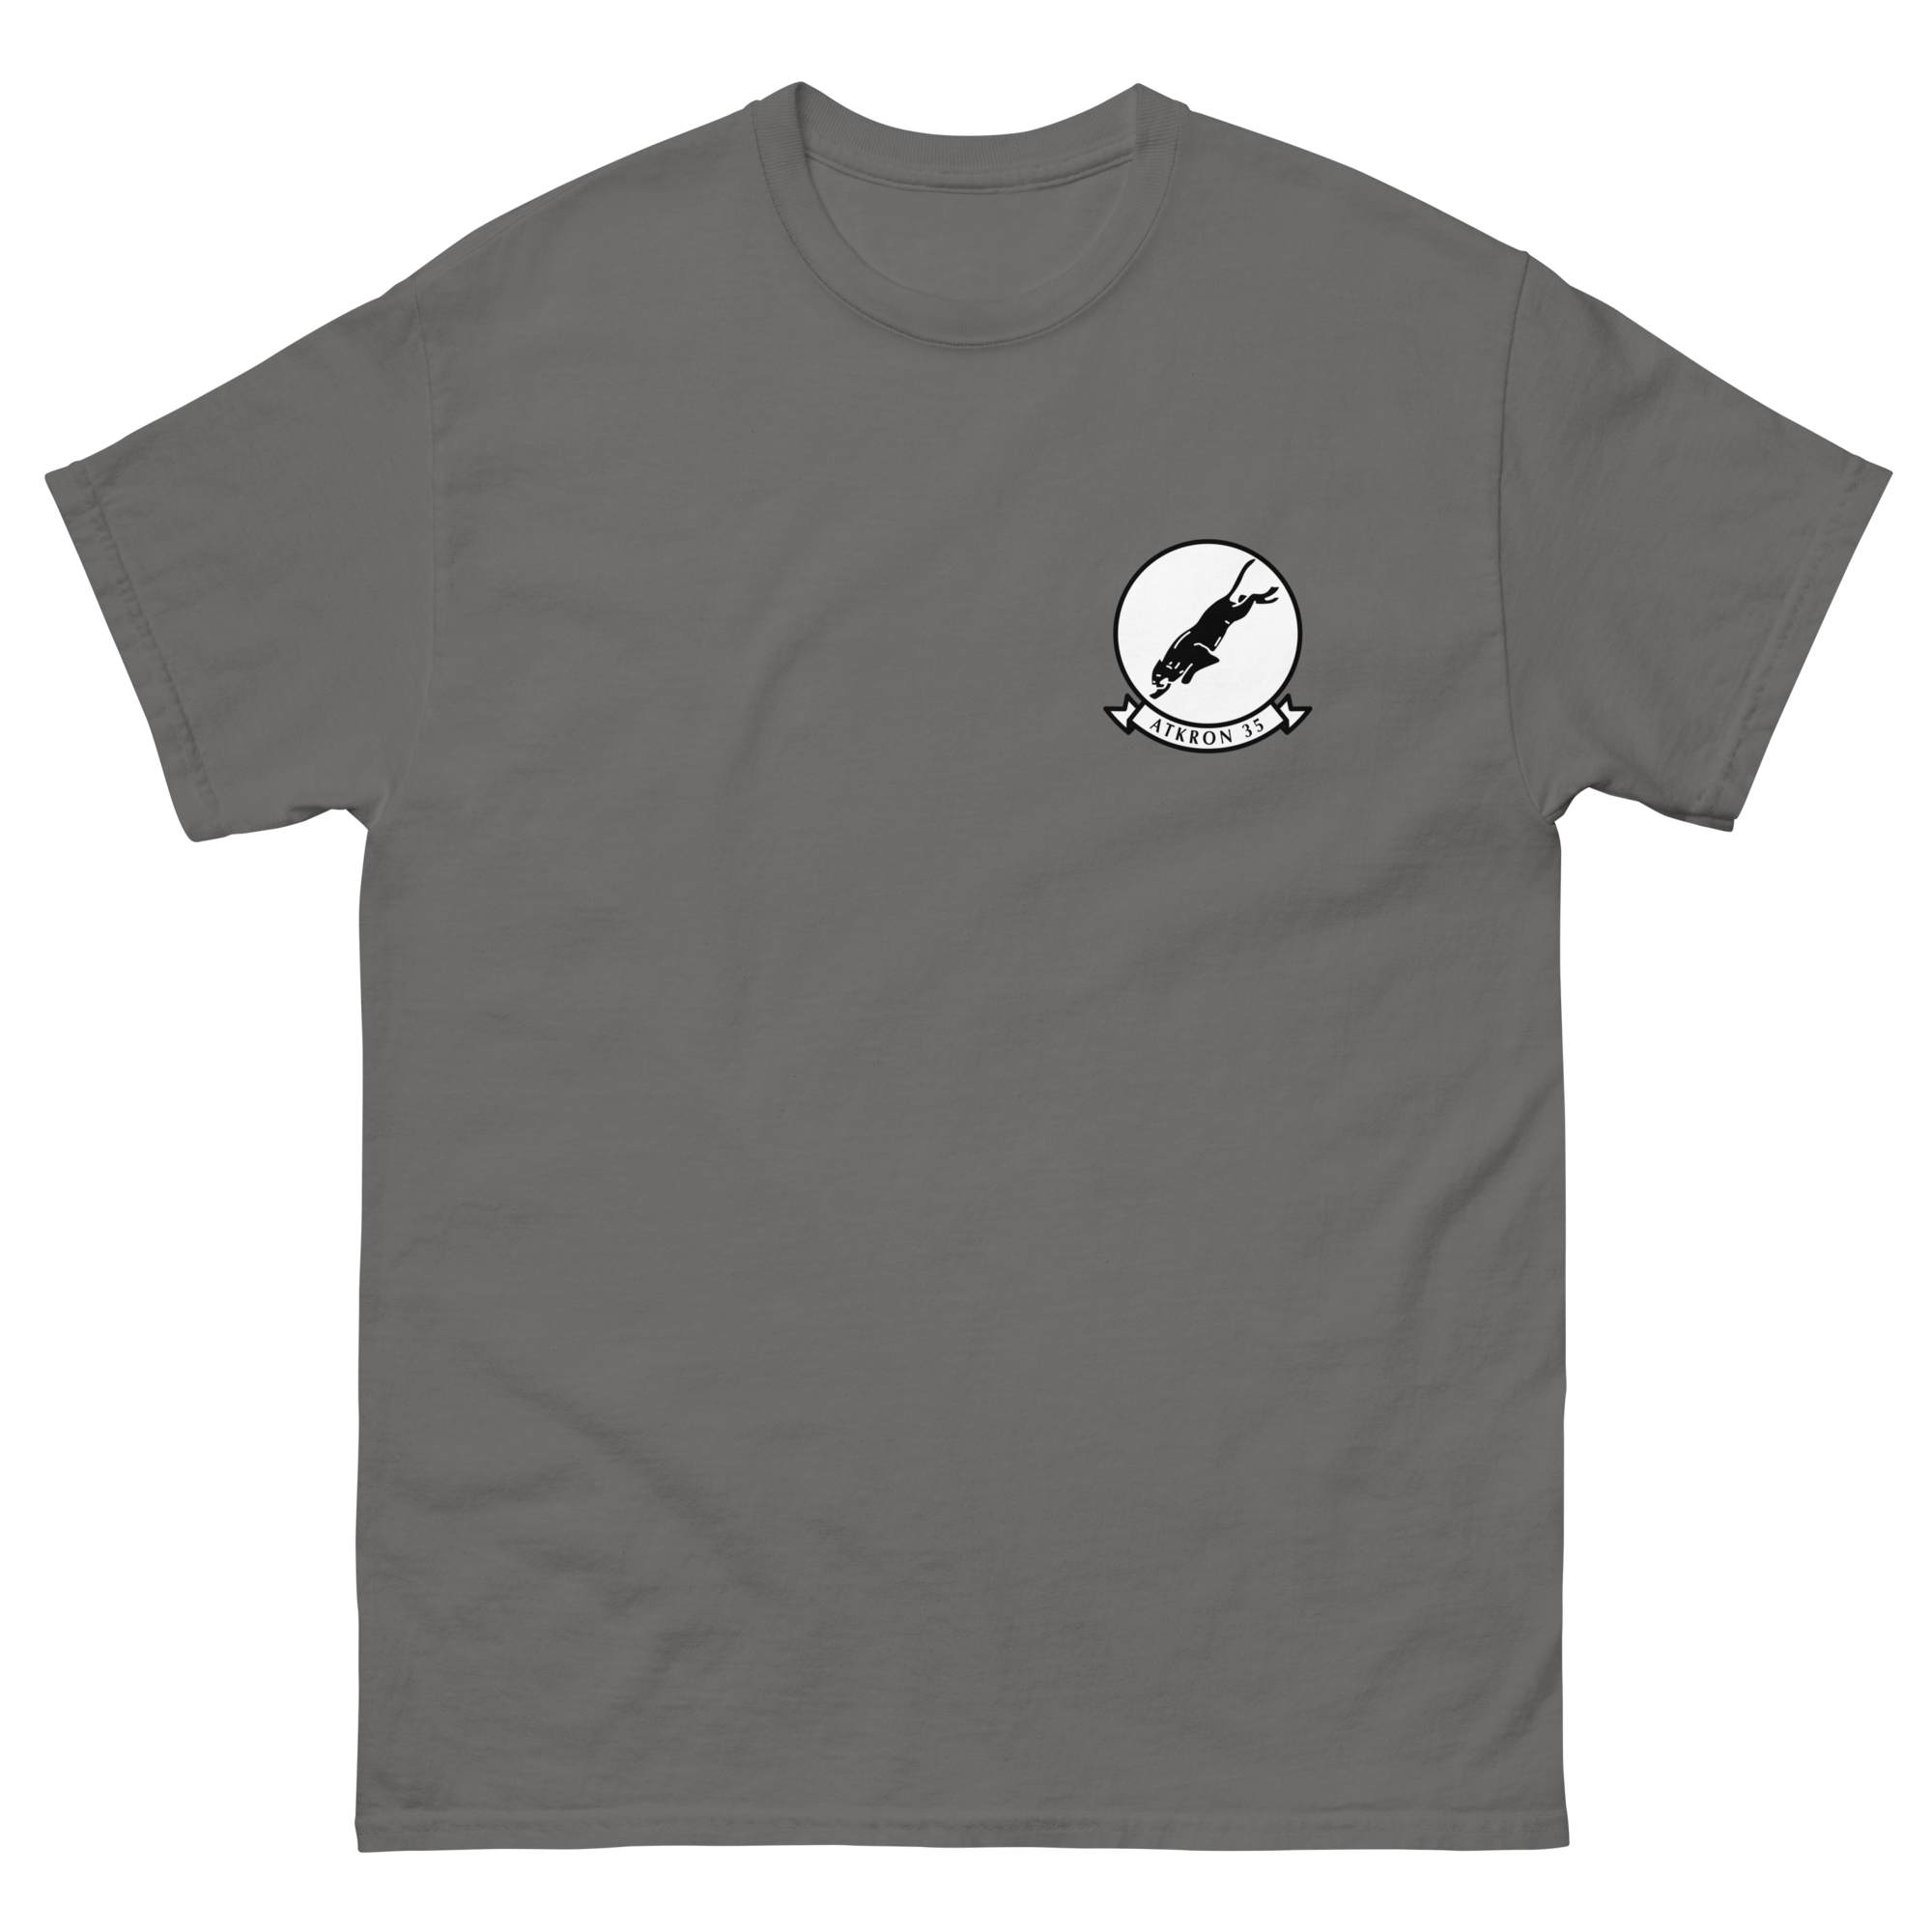 VA-35 Black Panthers Squadron Crest T-Shirt